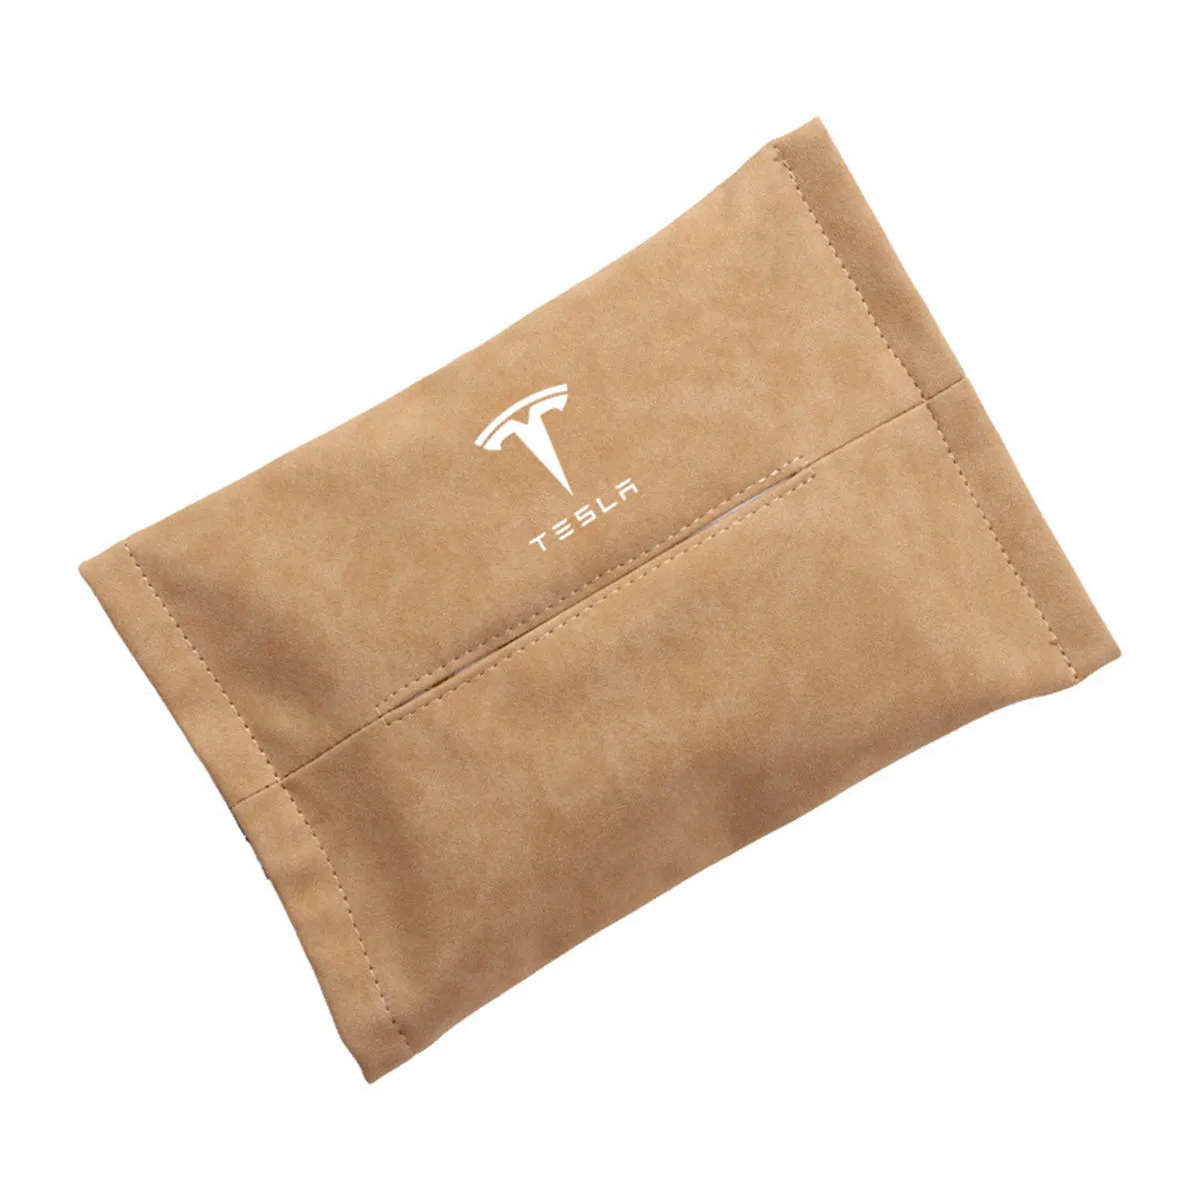 Tissue Box for Tesla Model S/3/X/Y